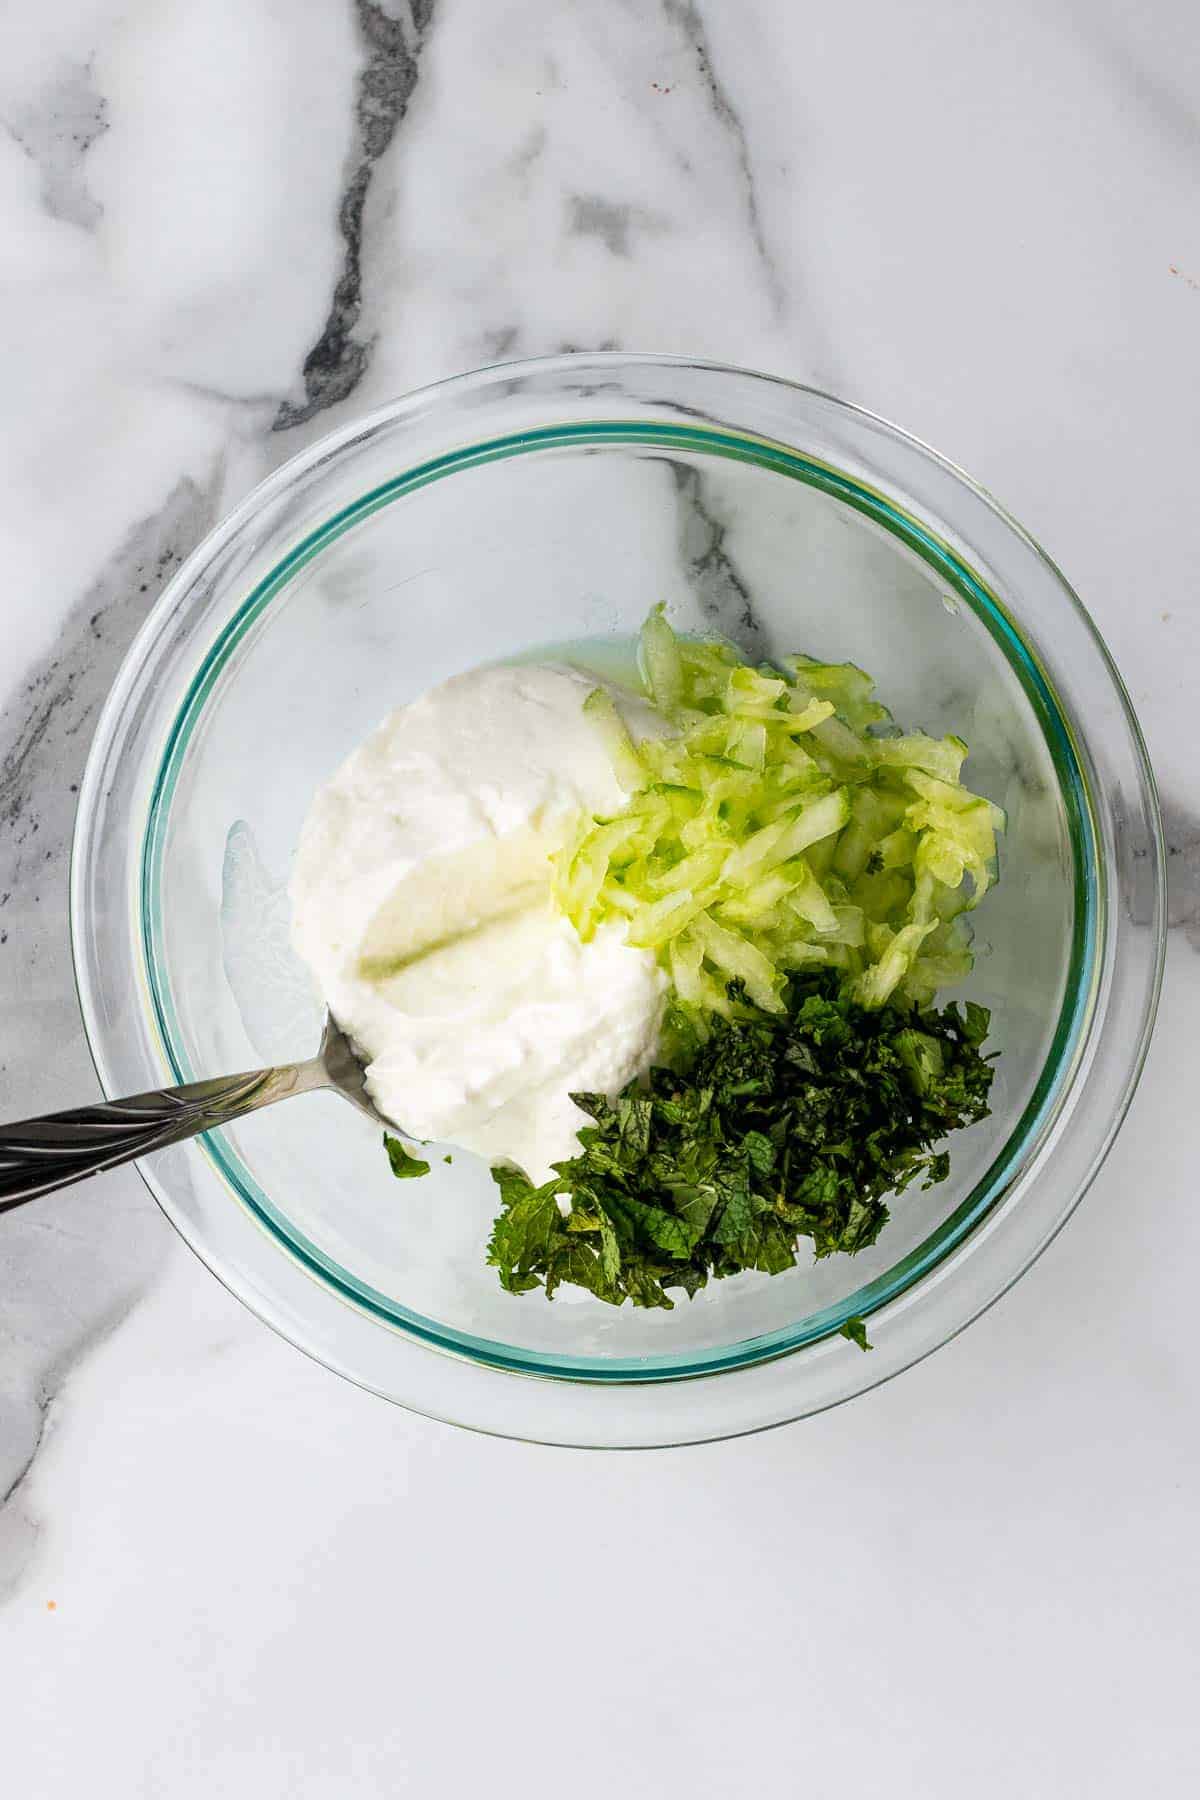 Cucumber, mint, cilantro, and yogurt in a glass bowl